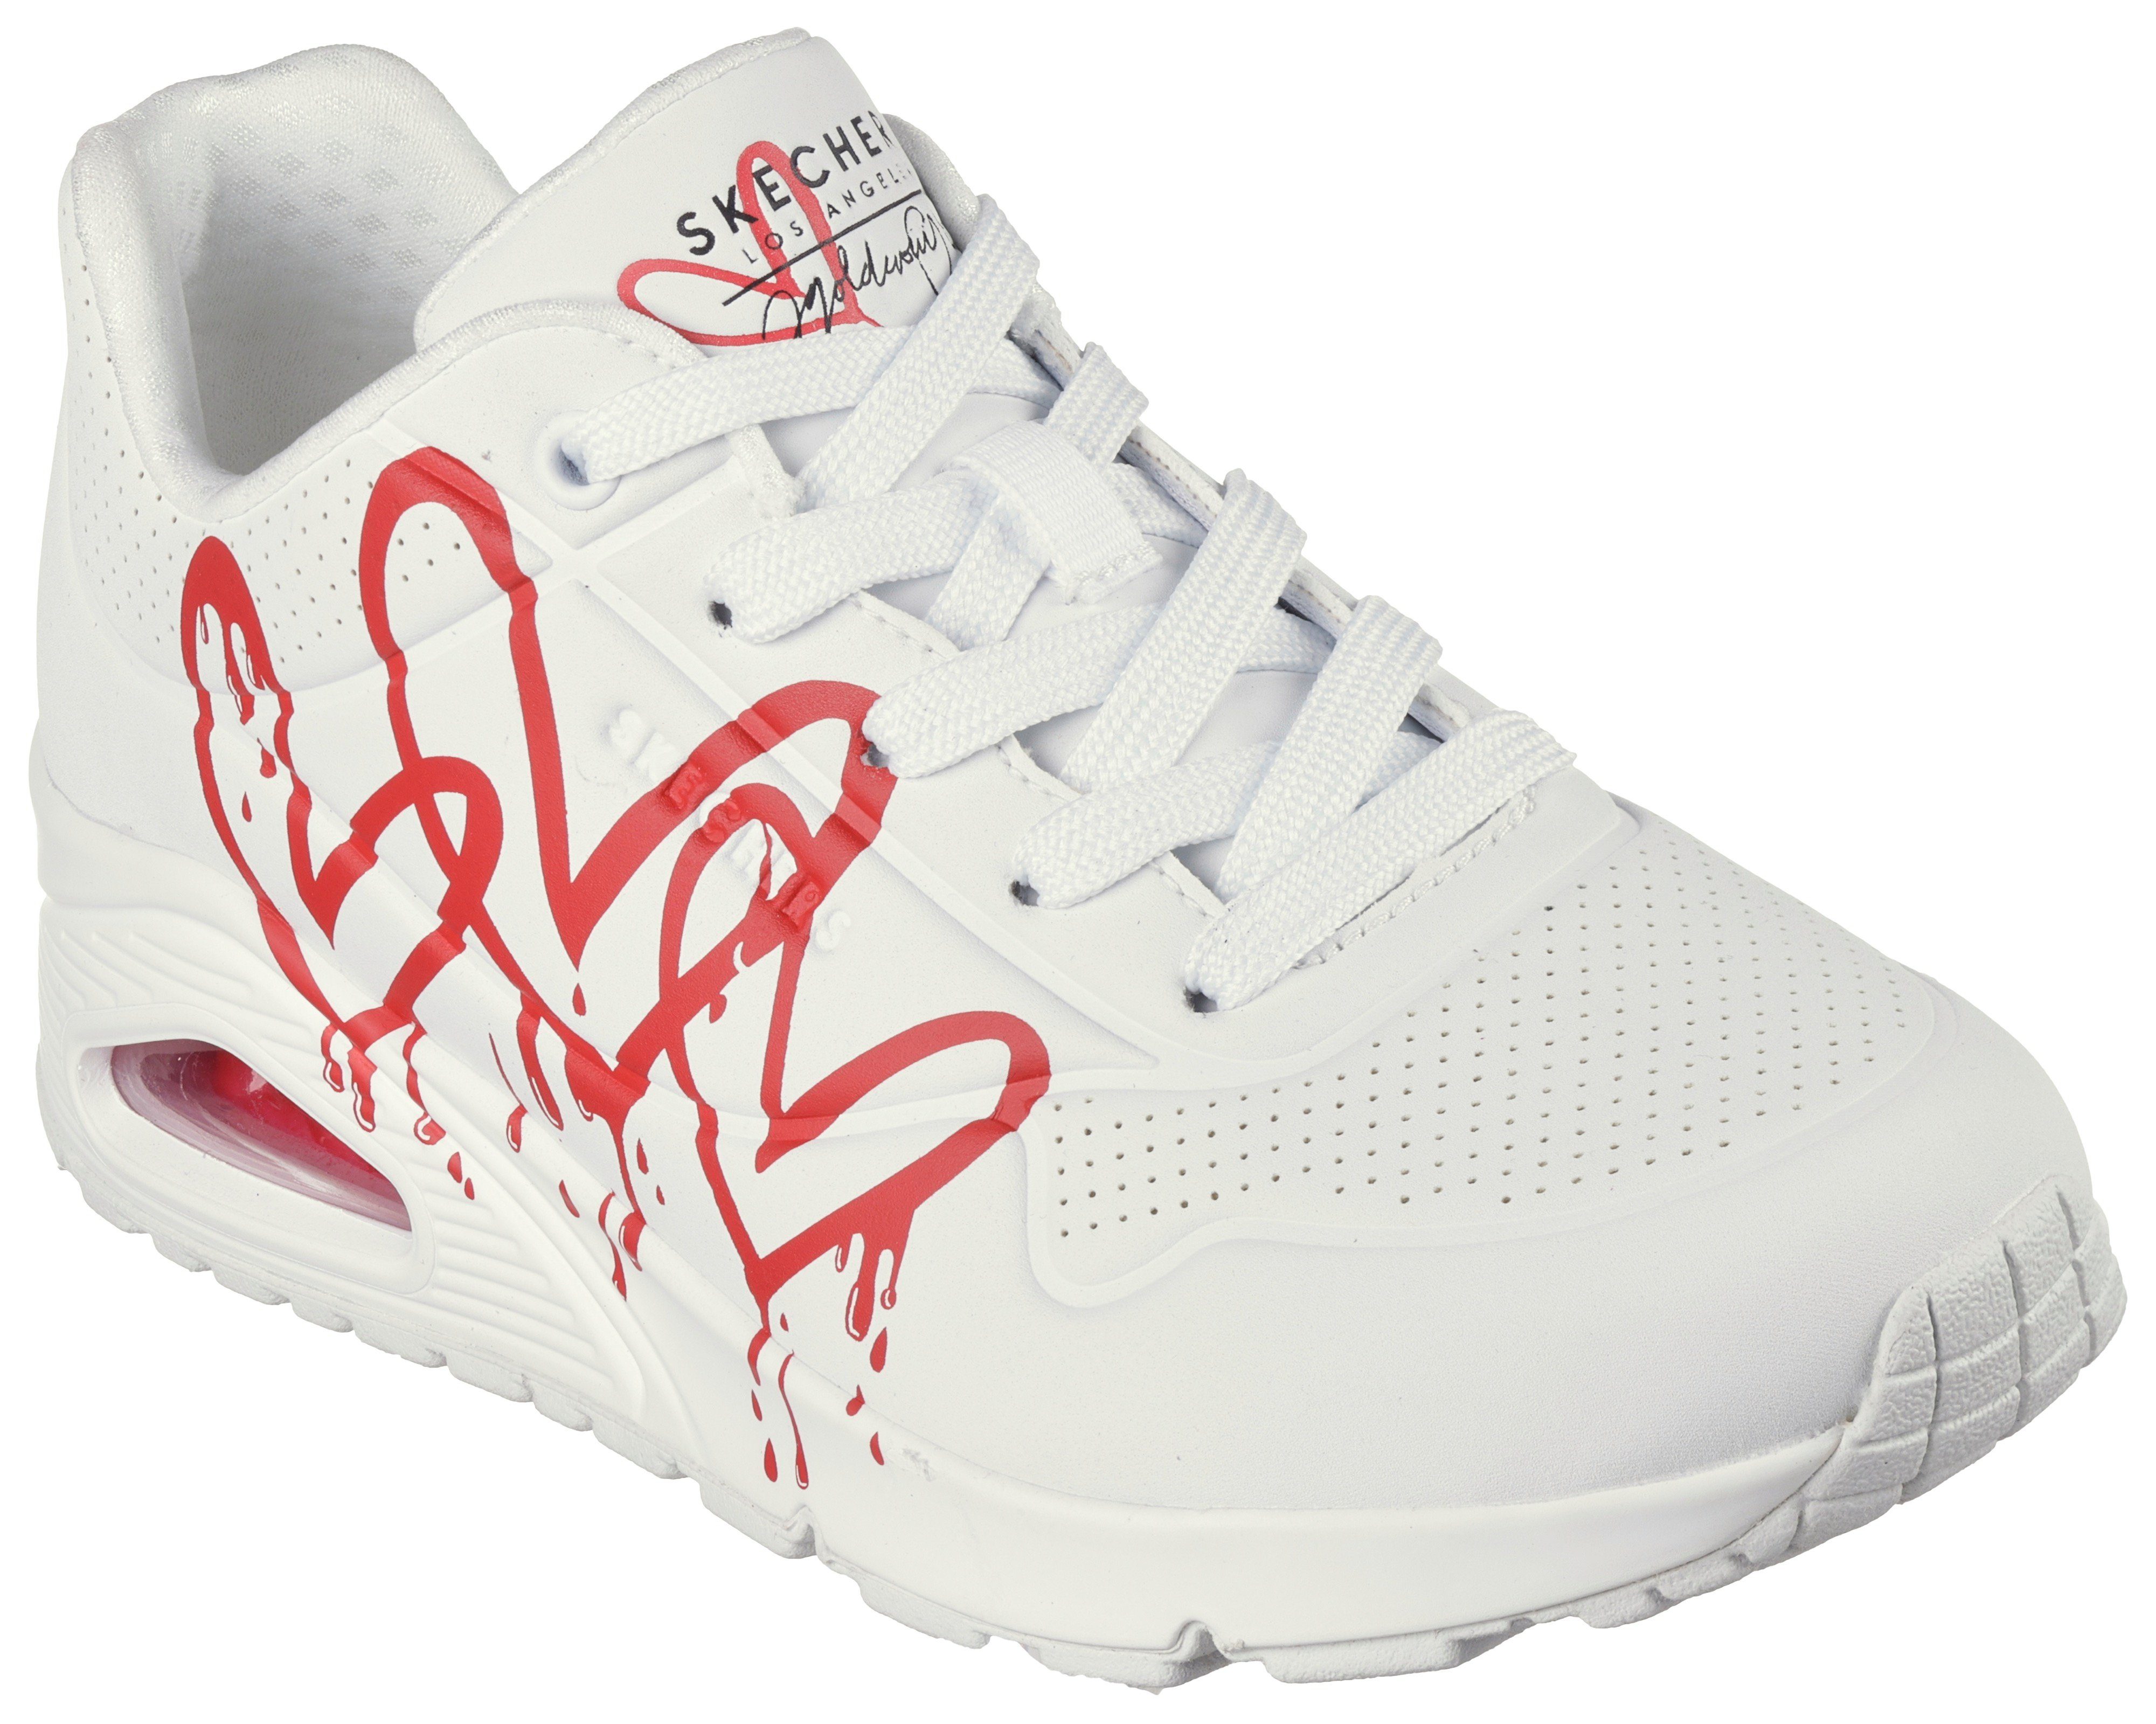 Skechers UNO DRIPPING IN LOVE Sneaker mit Herzen-Graffity-Print weiß-rot